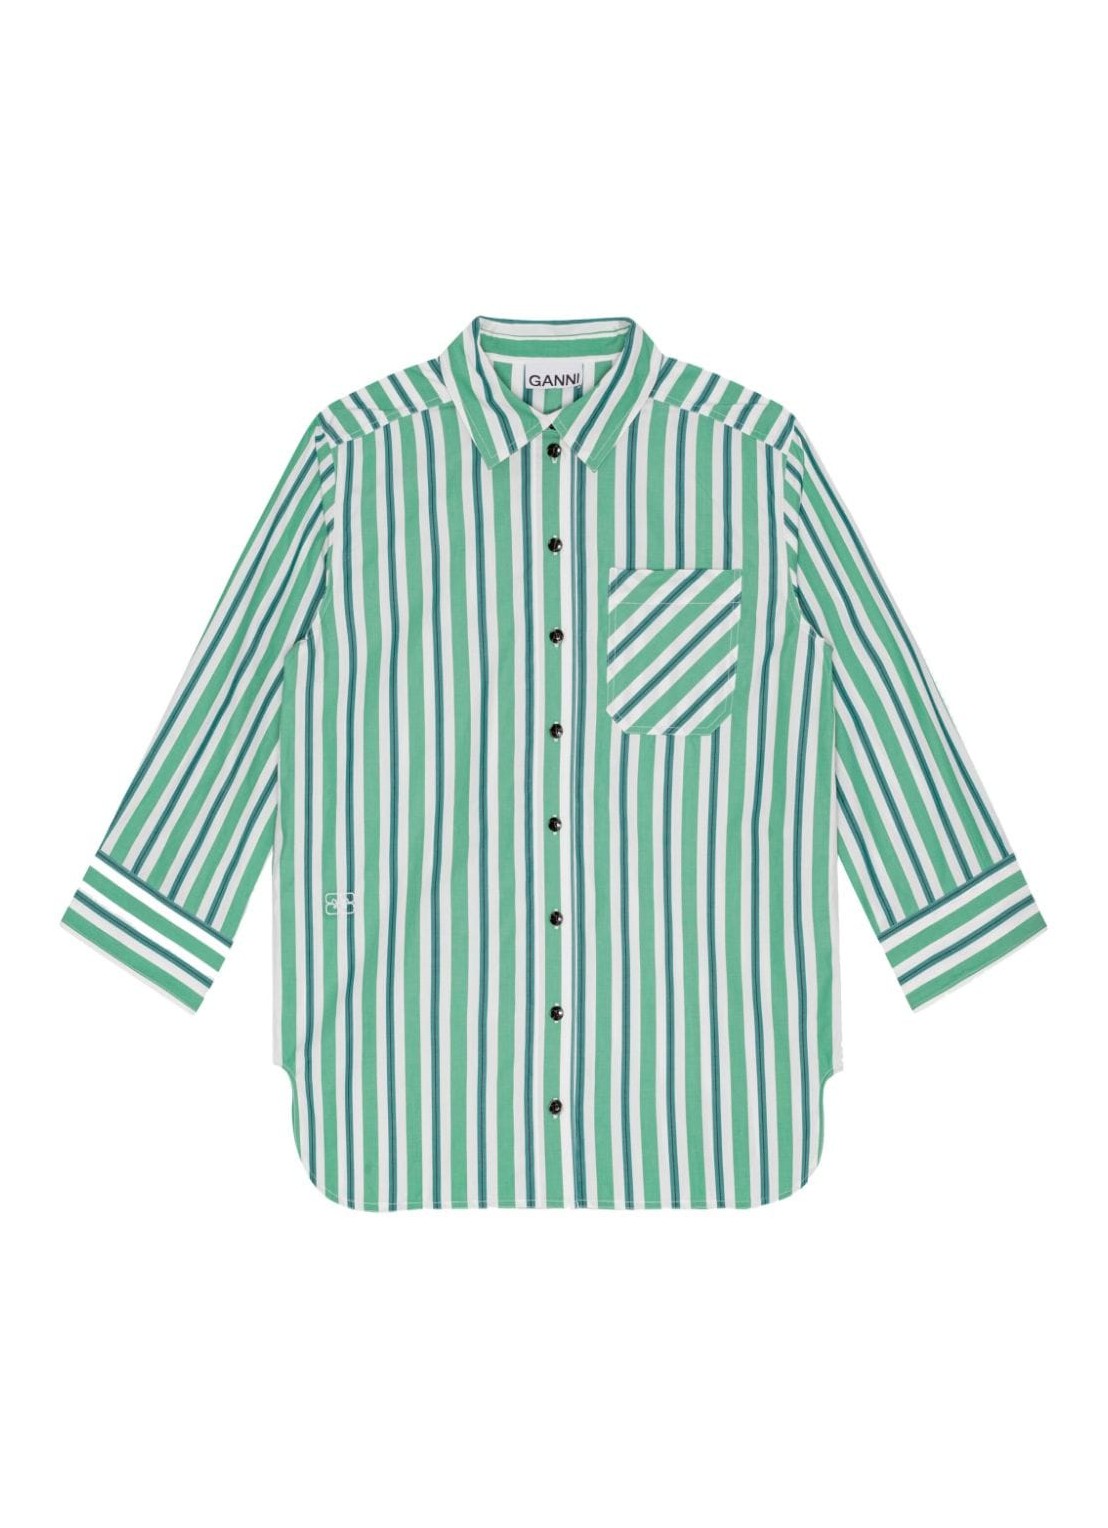 Camiseria ganni shirt woman stripe cotton shirt f9022 879 talla 40
 